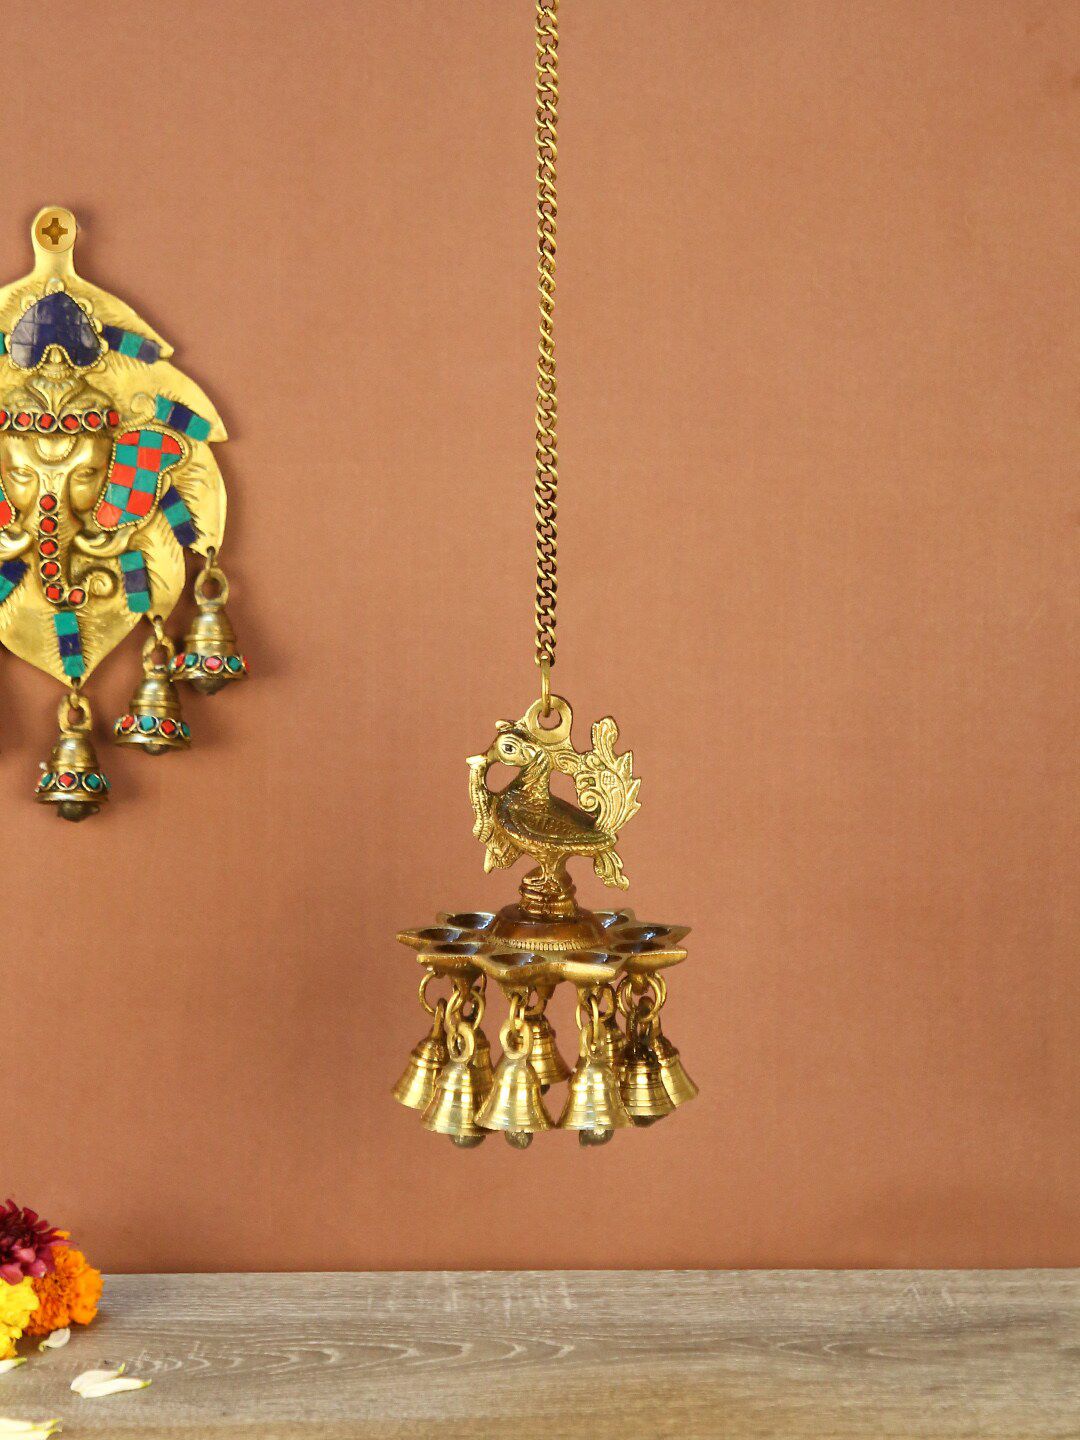 Aapno Rajasthan Gold-Toned & Brown Peacock Hanging Oil Lamp Price in India